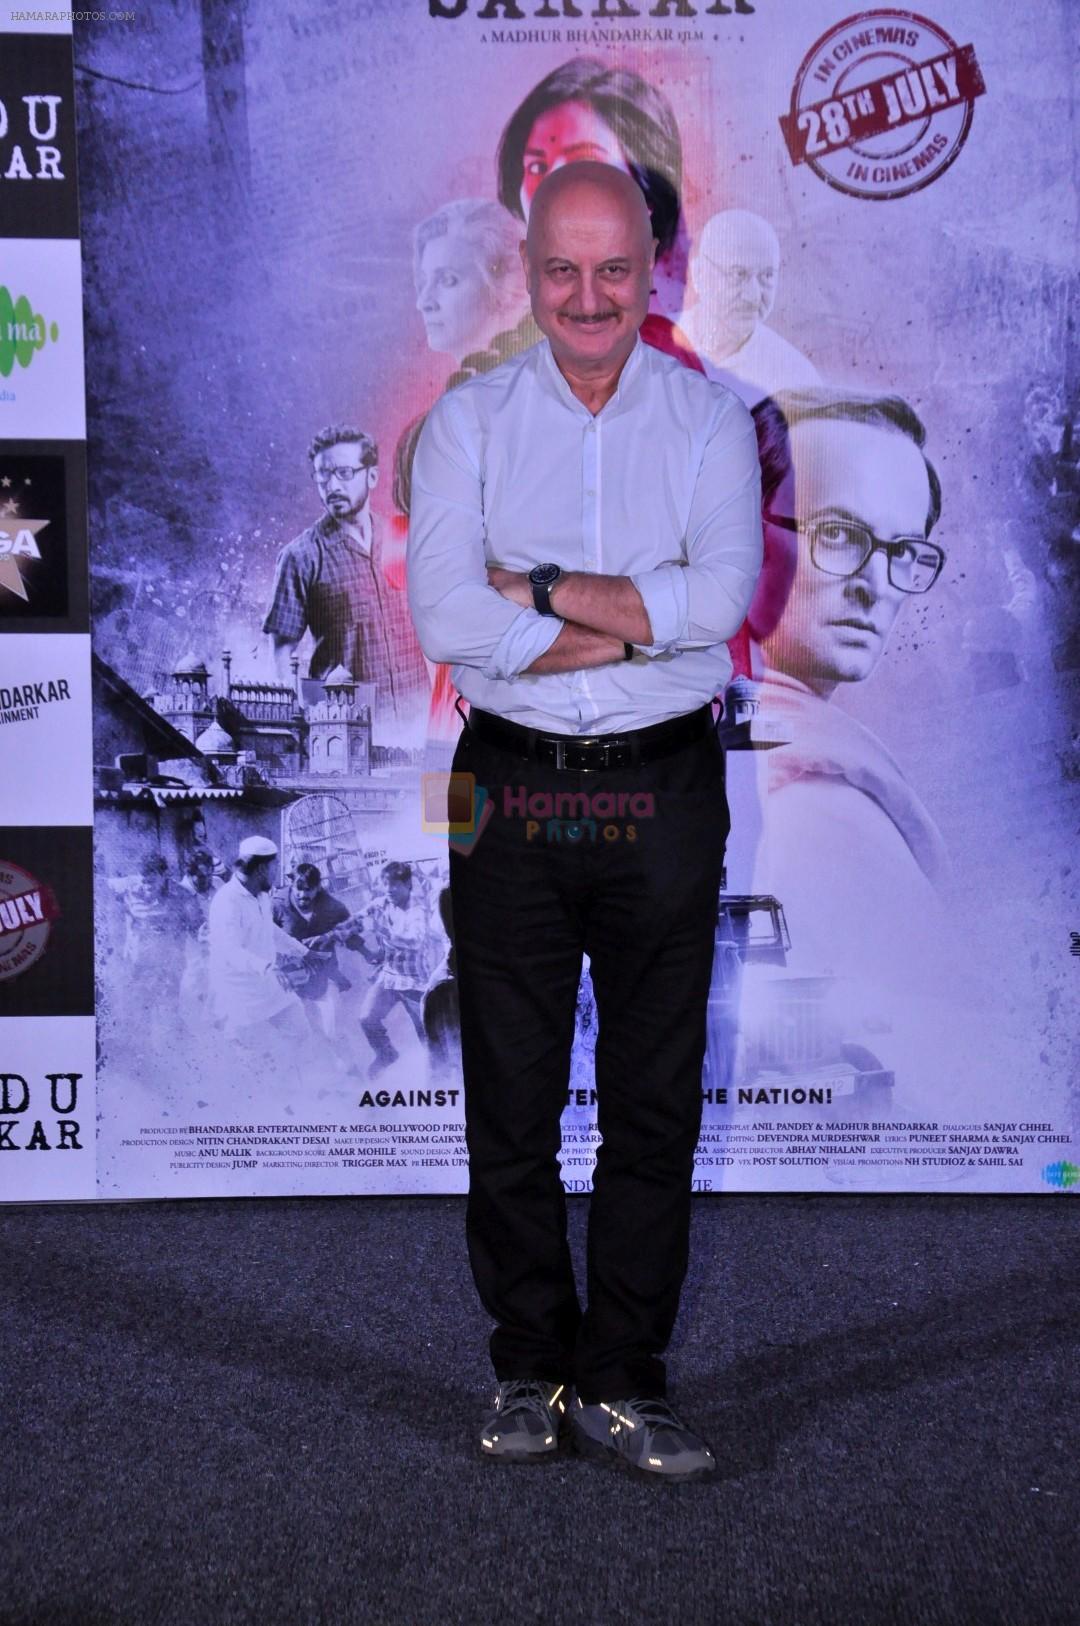 Anupam Kher at the Trailer Launch Of Film Indu Sarkar in Mumbai on 16th June 2017